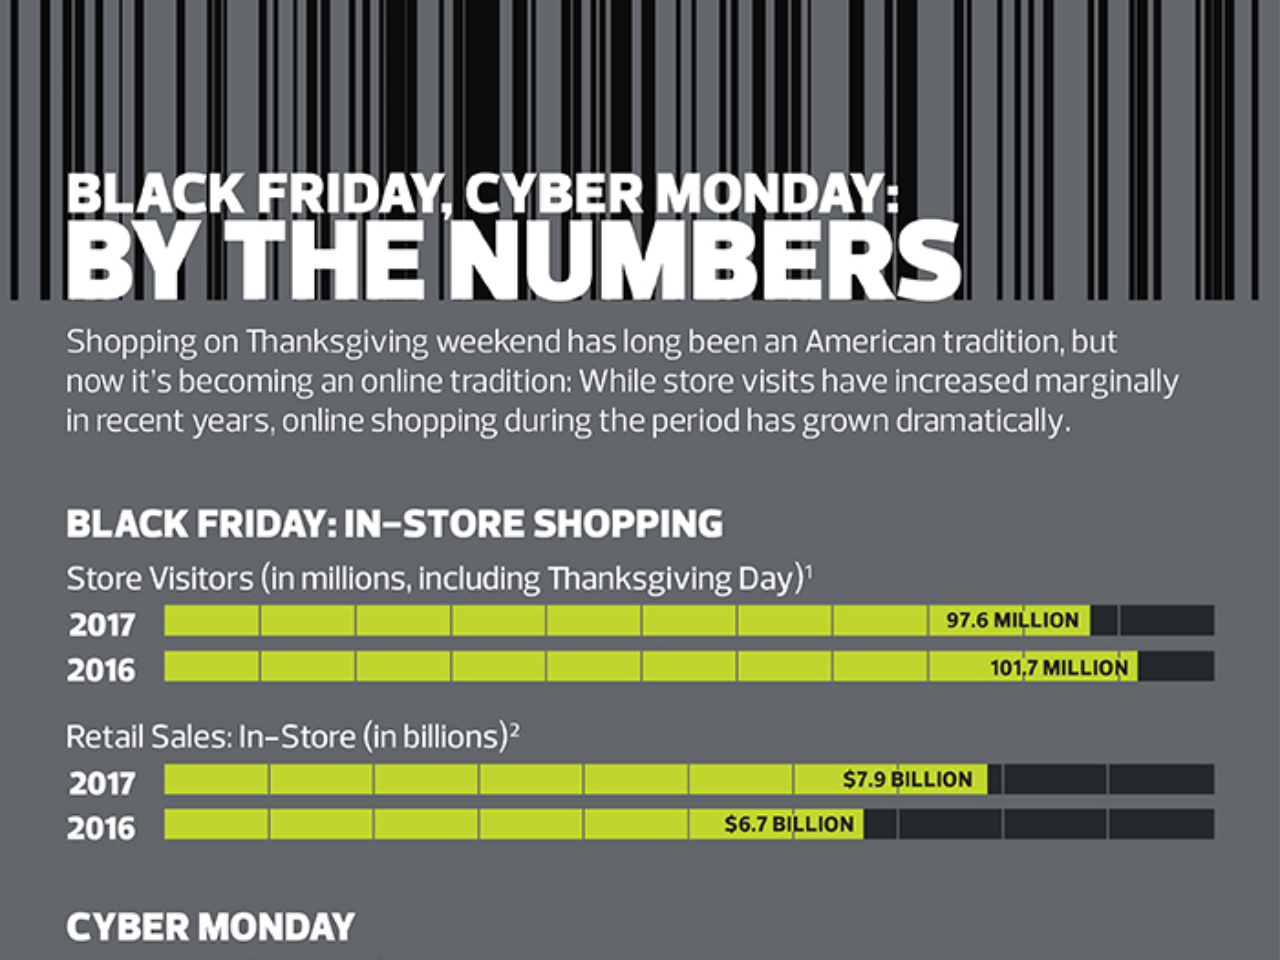 Black Friday Vs Cyber Monday Statistics [InfoGraphic]